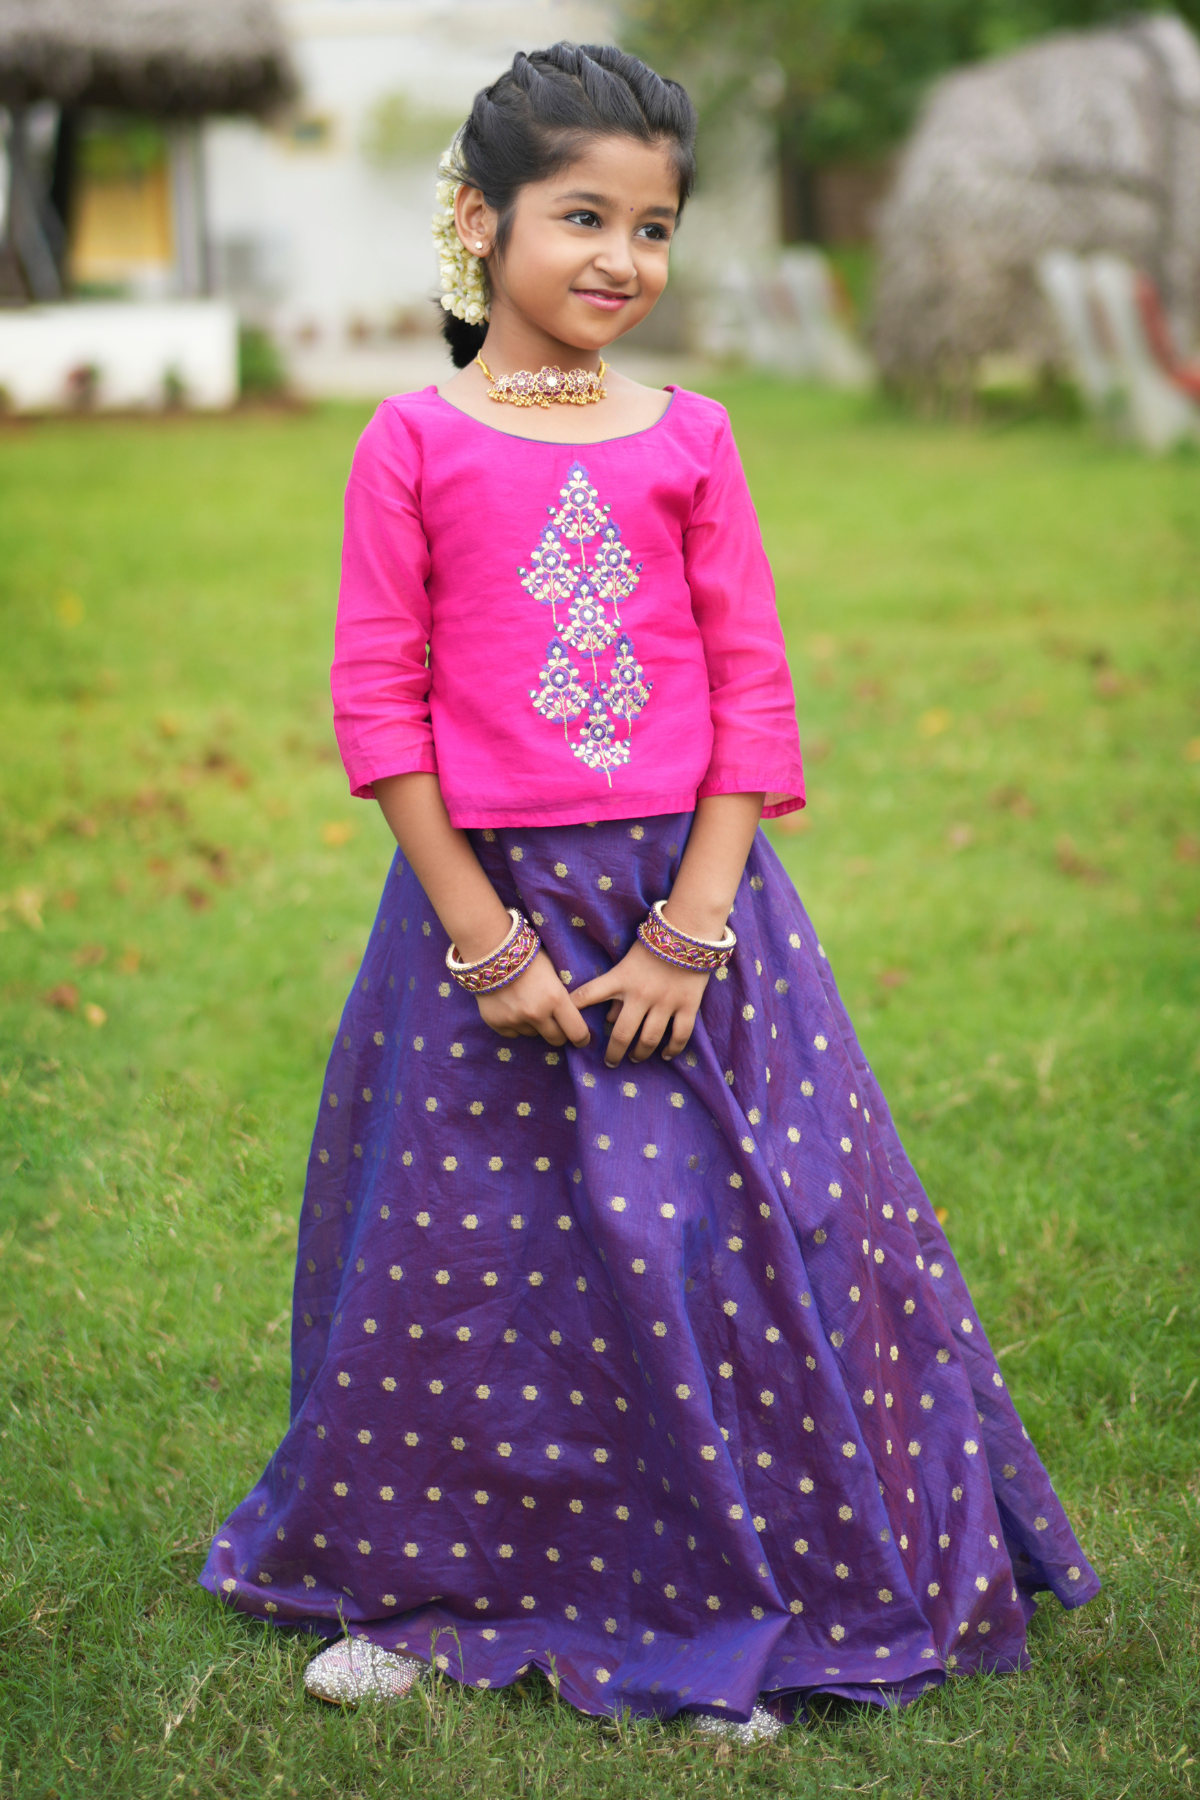 Floral Motifs Embroidered Top & Polka Dot Skirt Set -  Pink & Purple